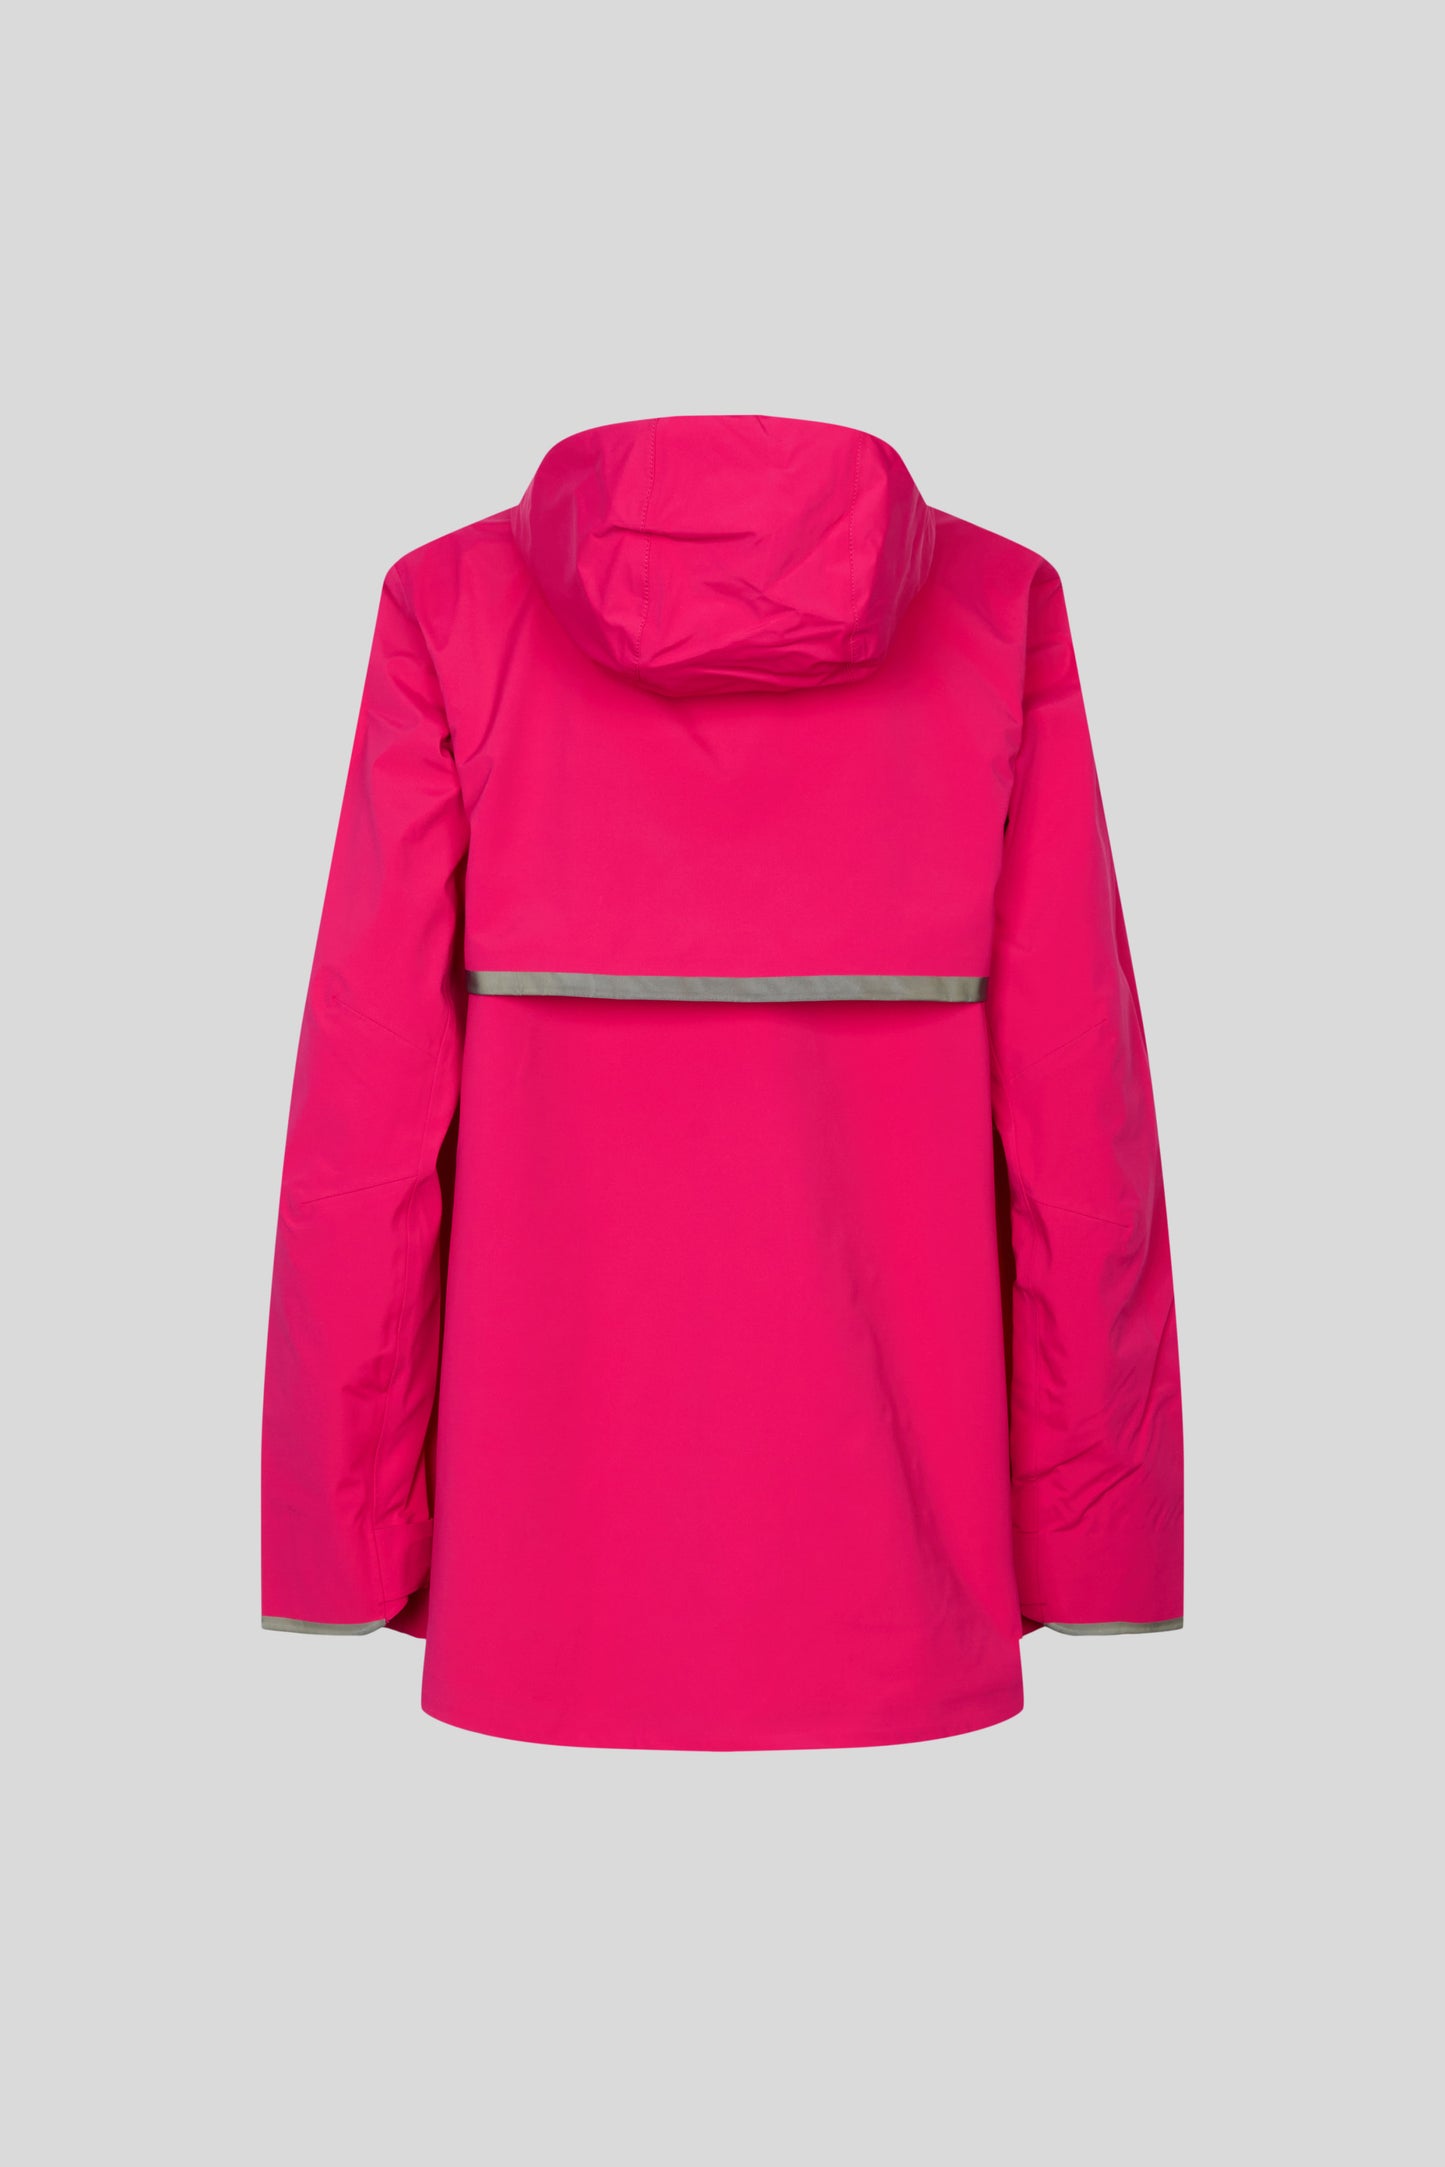 Women's Kenora Rain Jacket